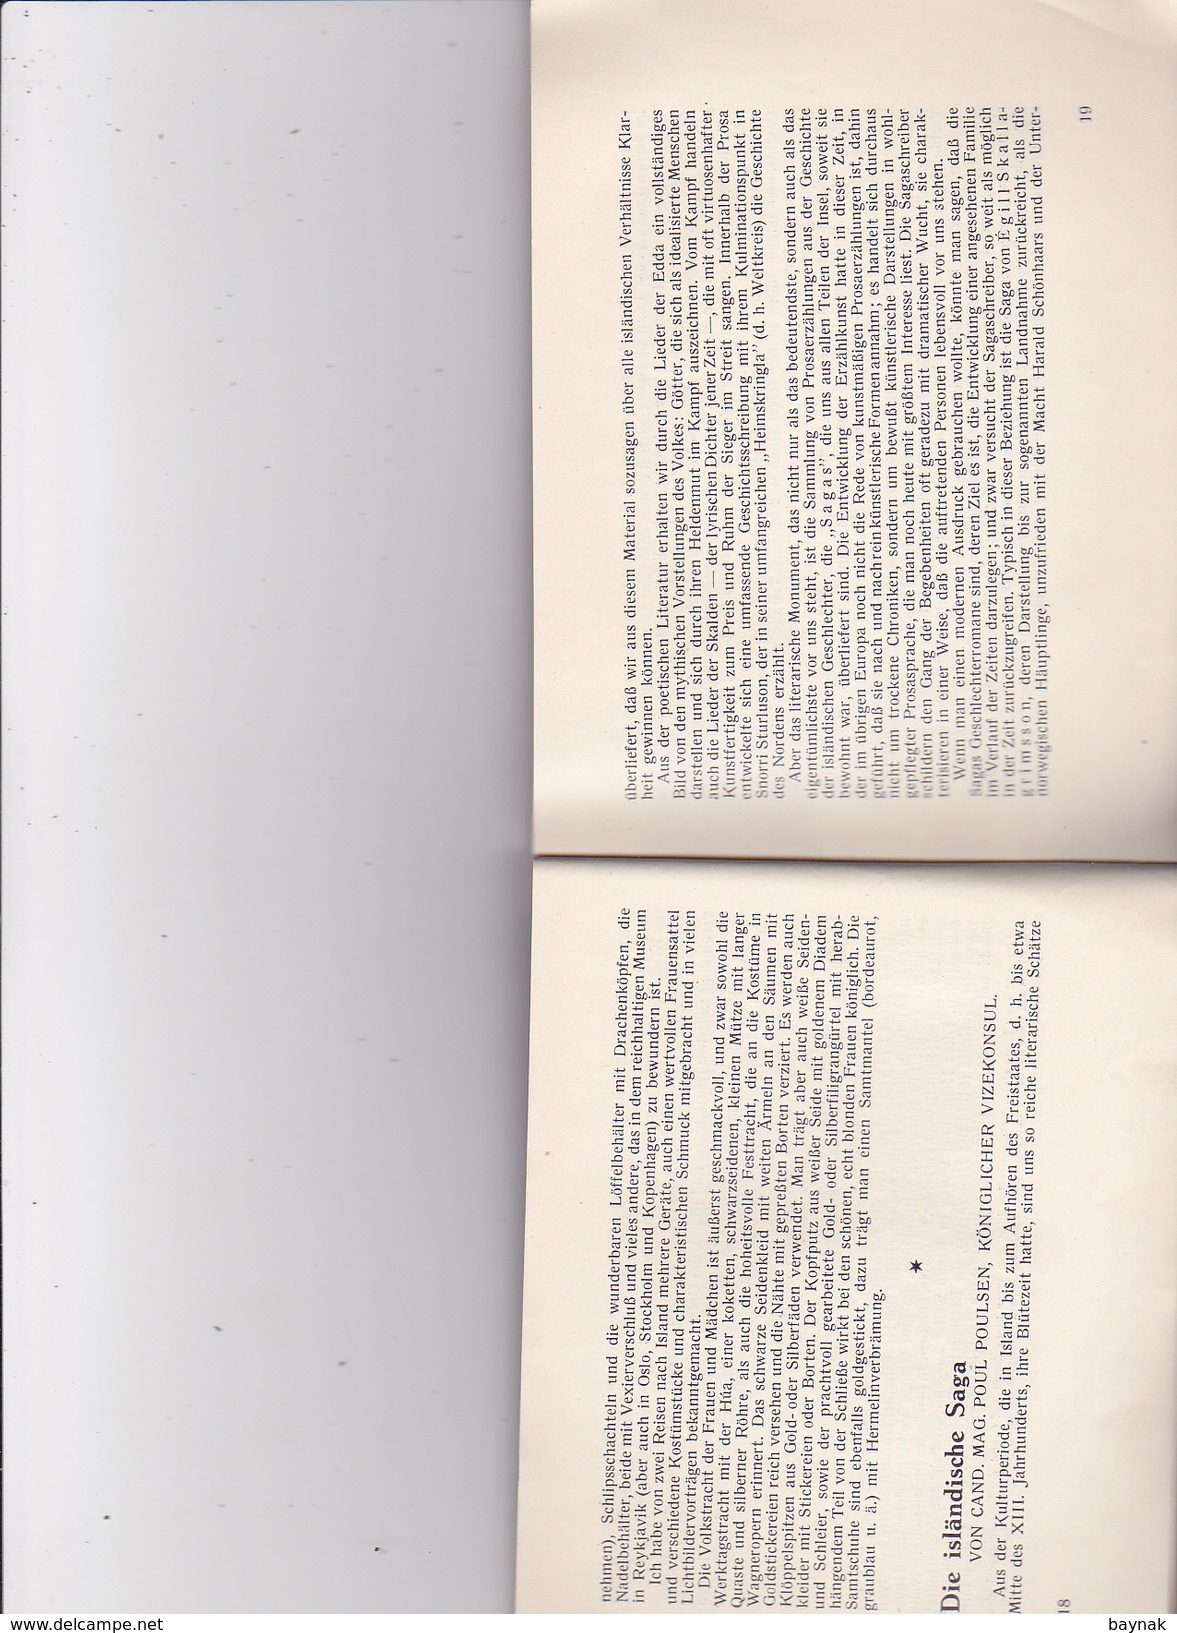 ISLAND --  AUSSTELLUNG WIEN 1930  --  BOOK  -  17 cm X 12 cm  -- 90 PAGES